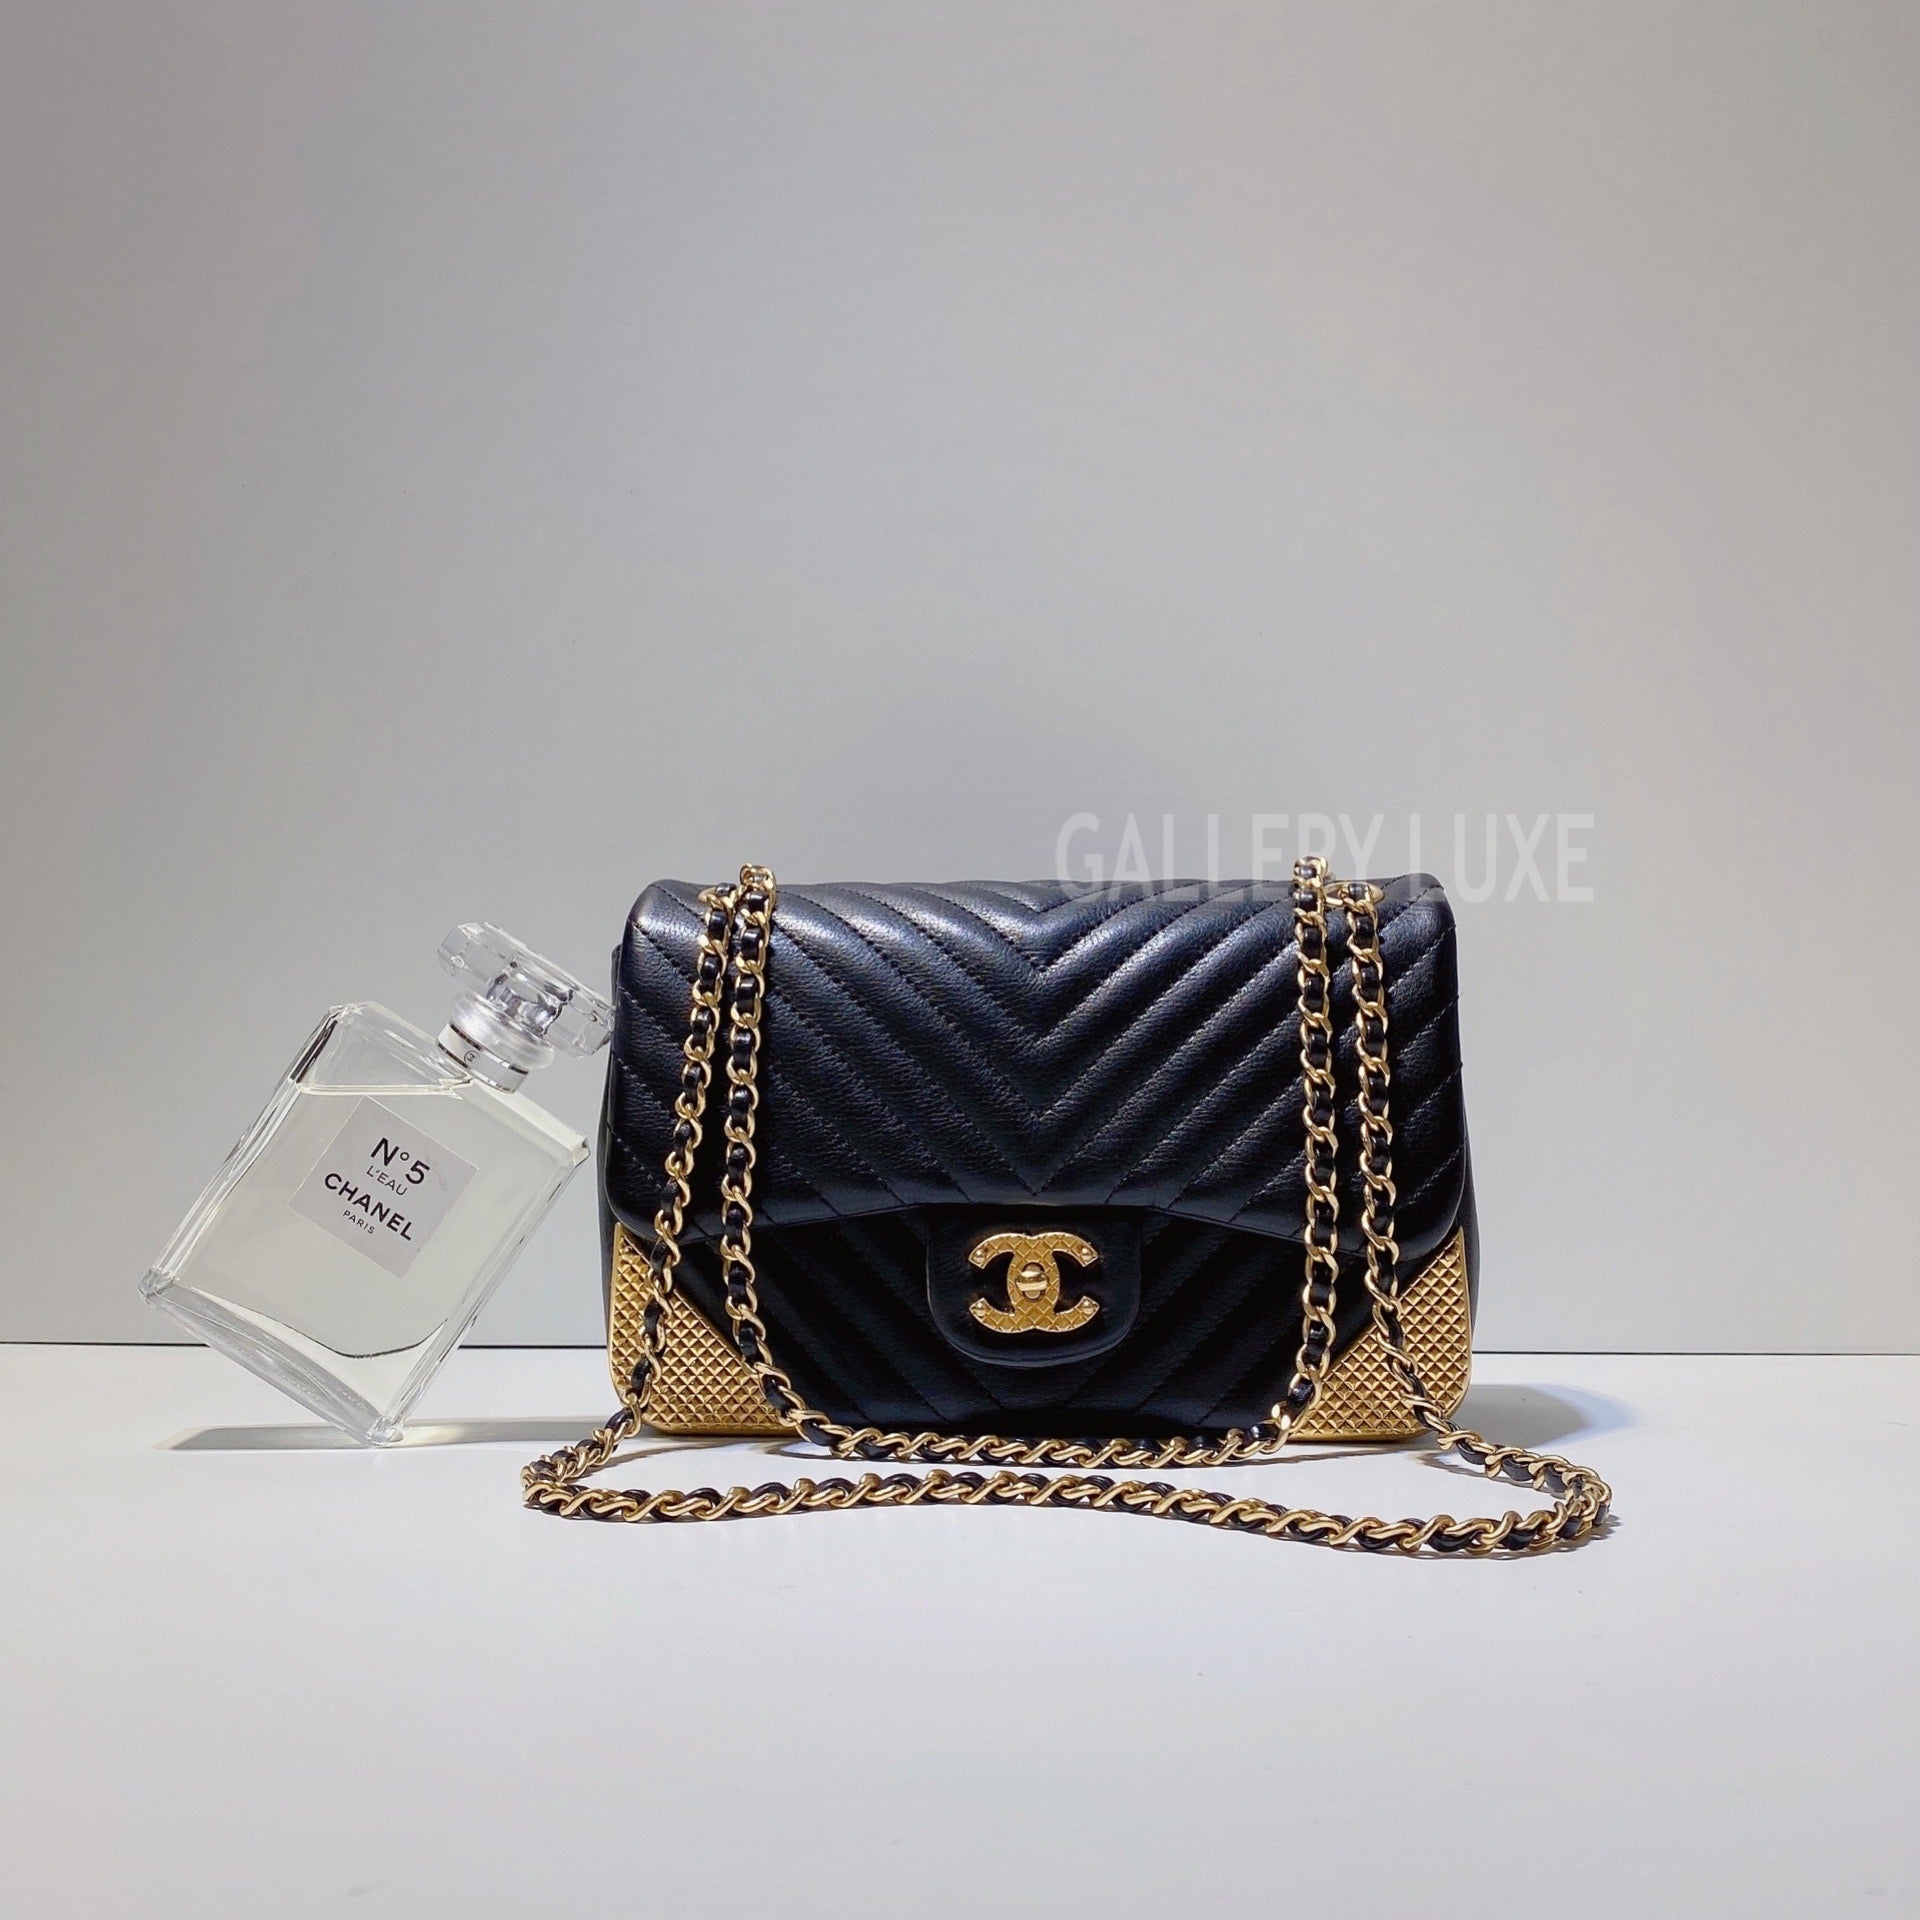 Chanel Chevron Sequin Classic Flap Bag